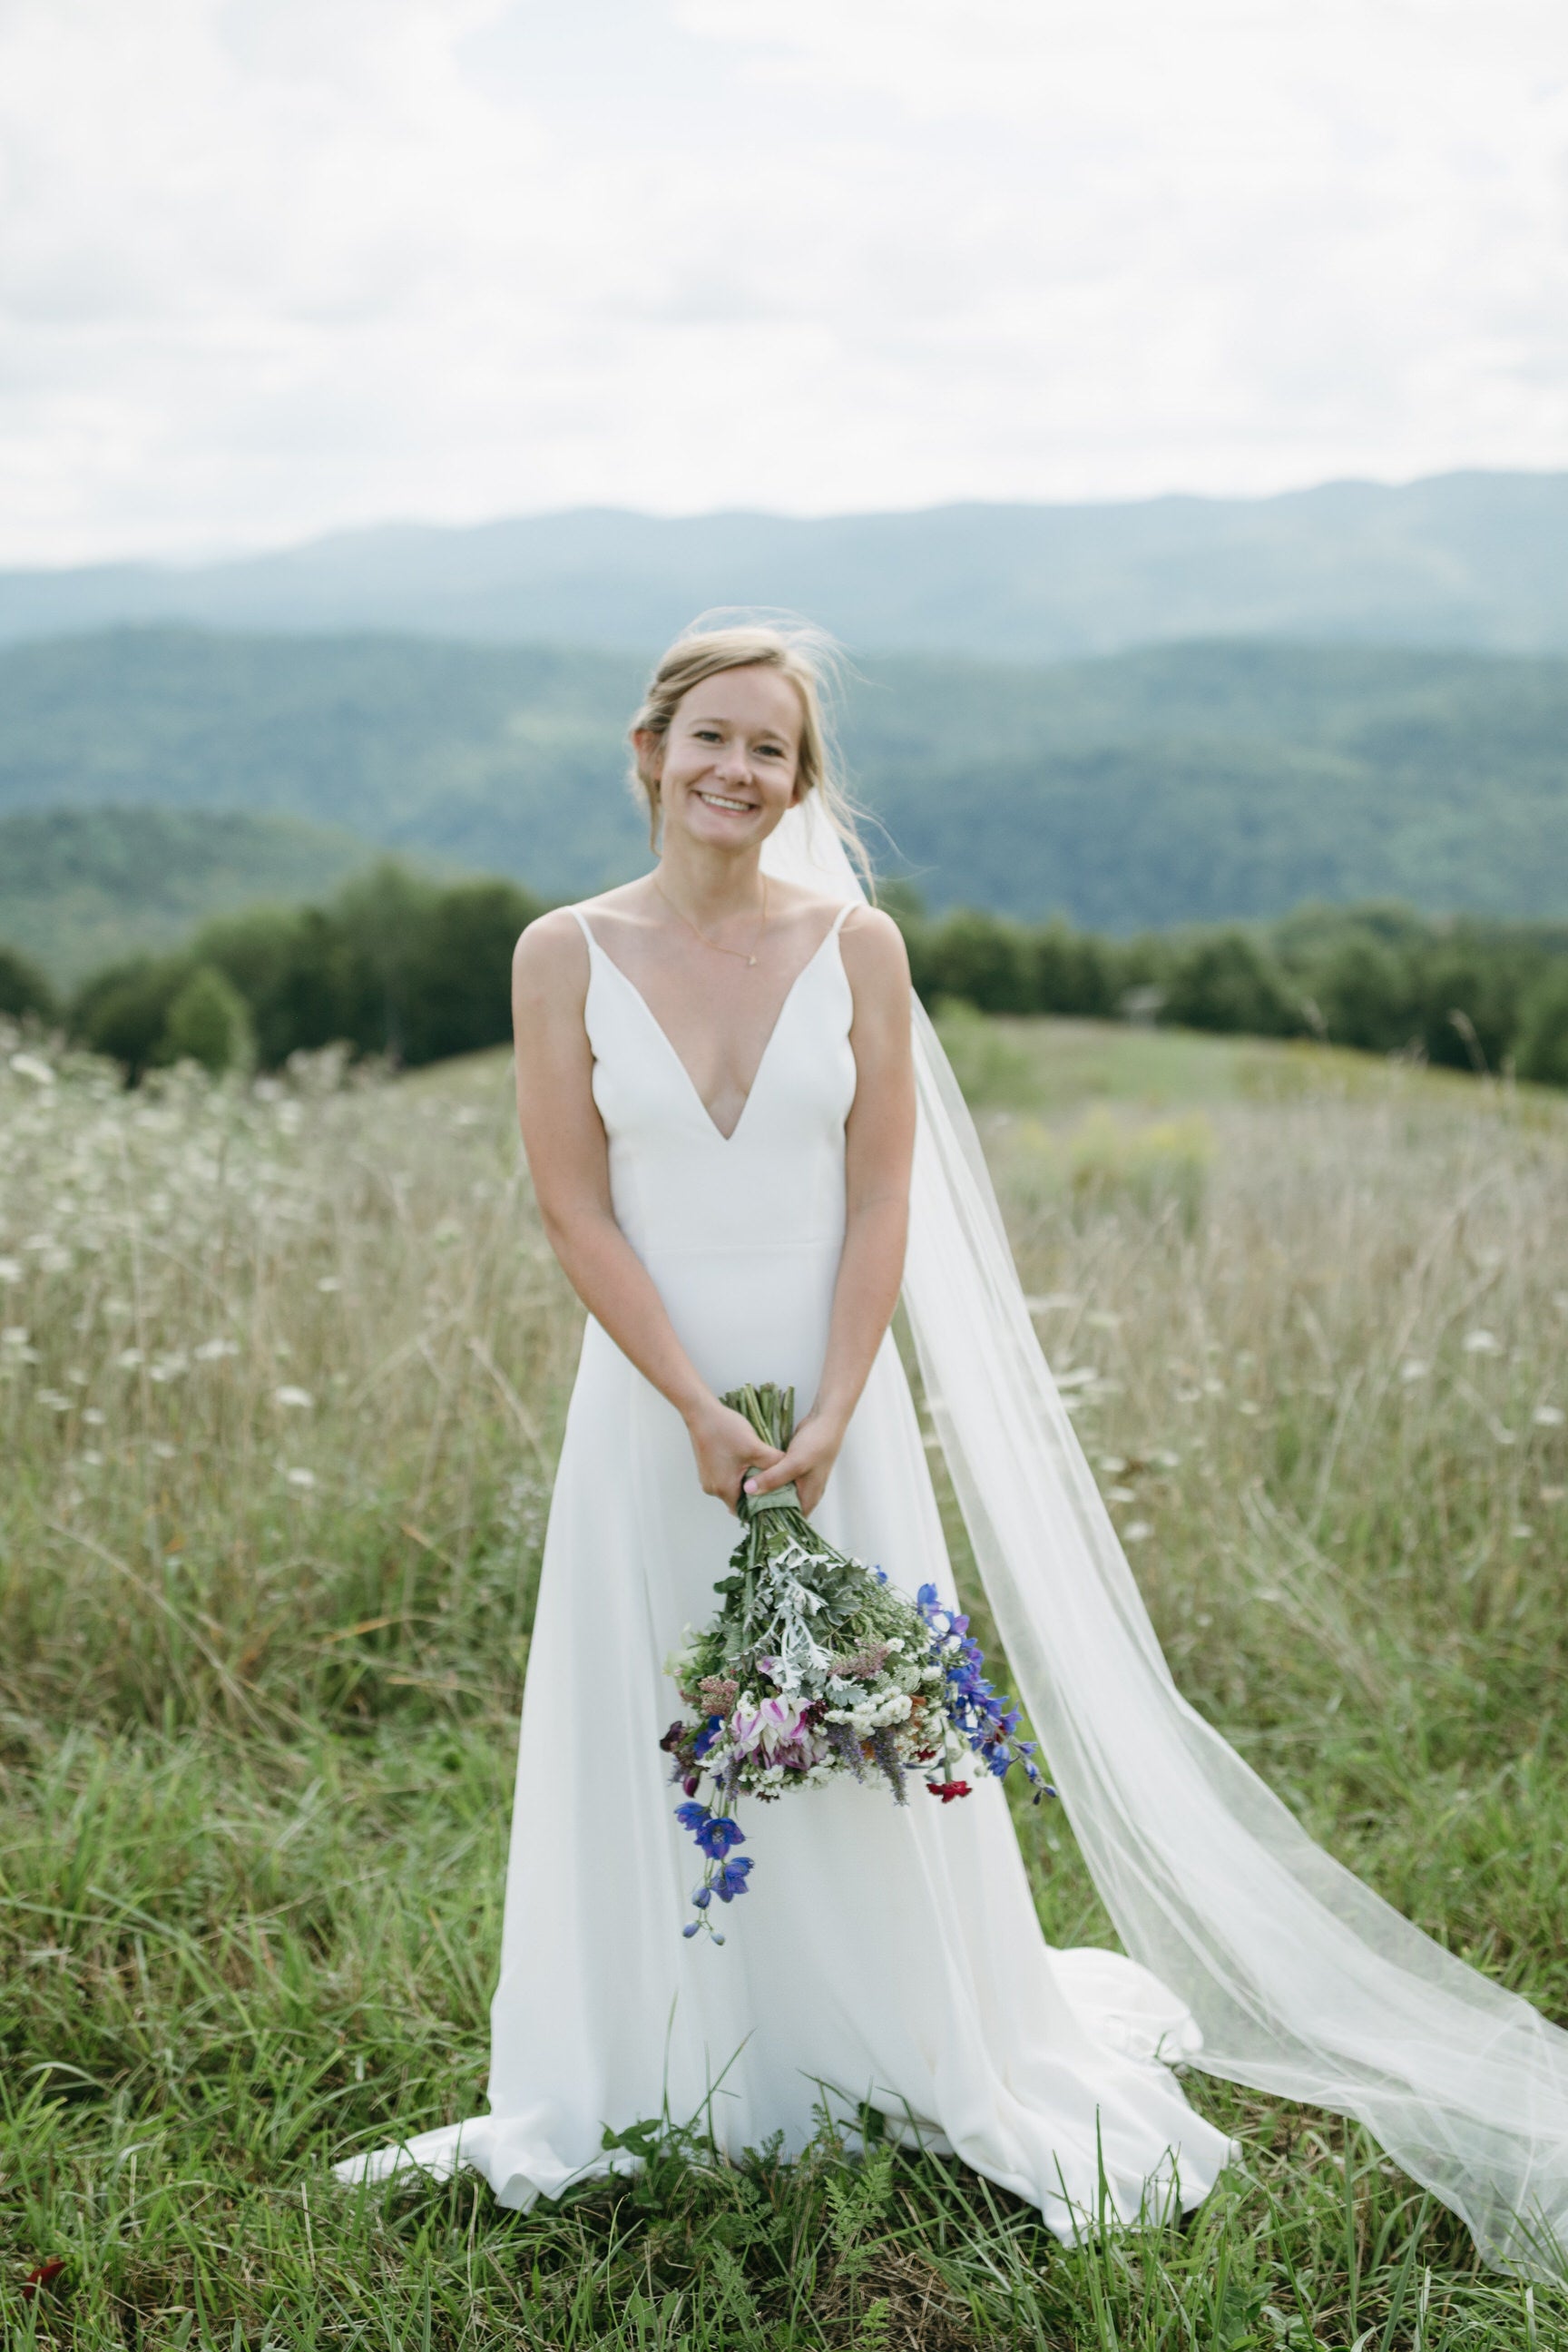 One Blushing Bride Chapel Length Wedding Veil, Simple Raw Edge Bridal Veil, White / Ivory White / 85-90 Inches